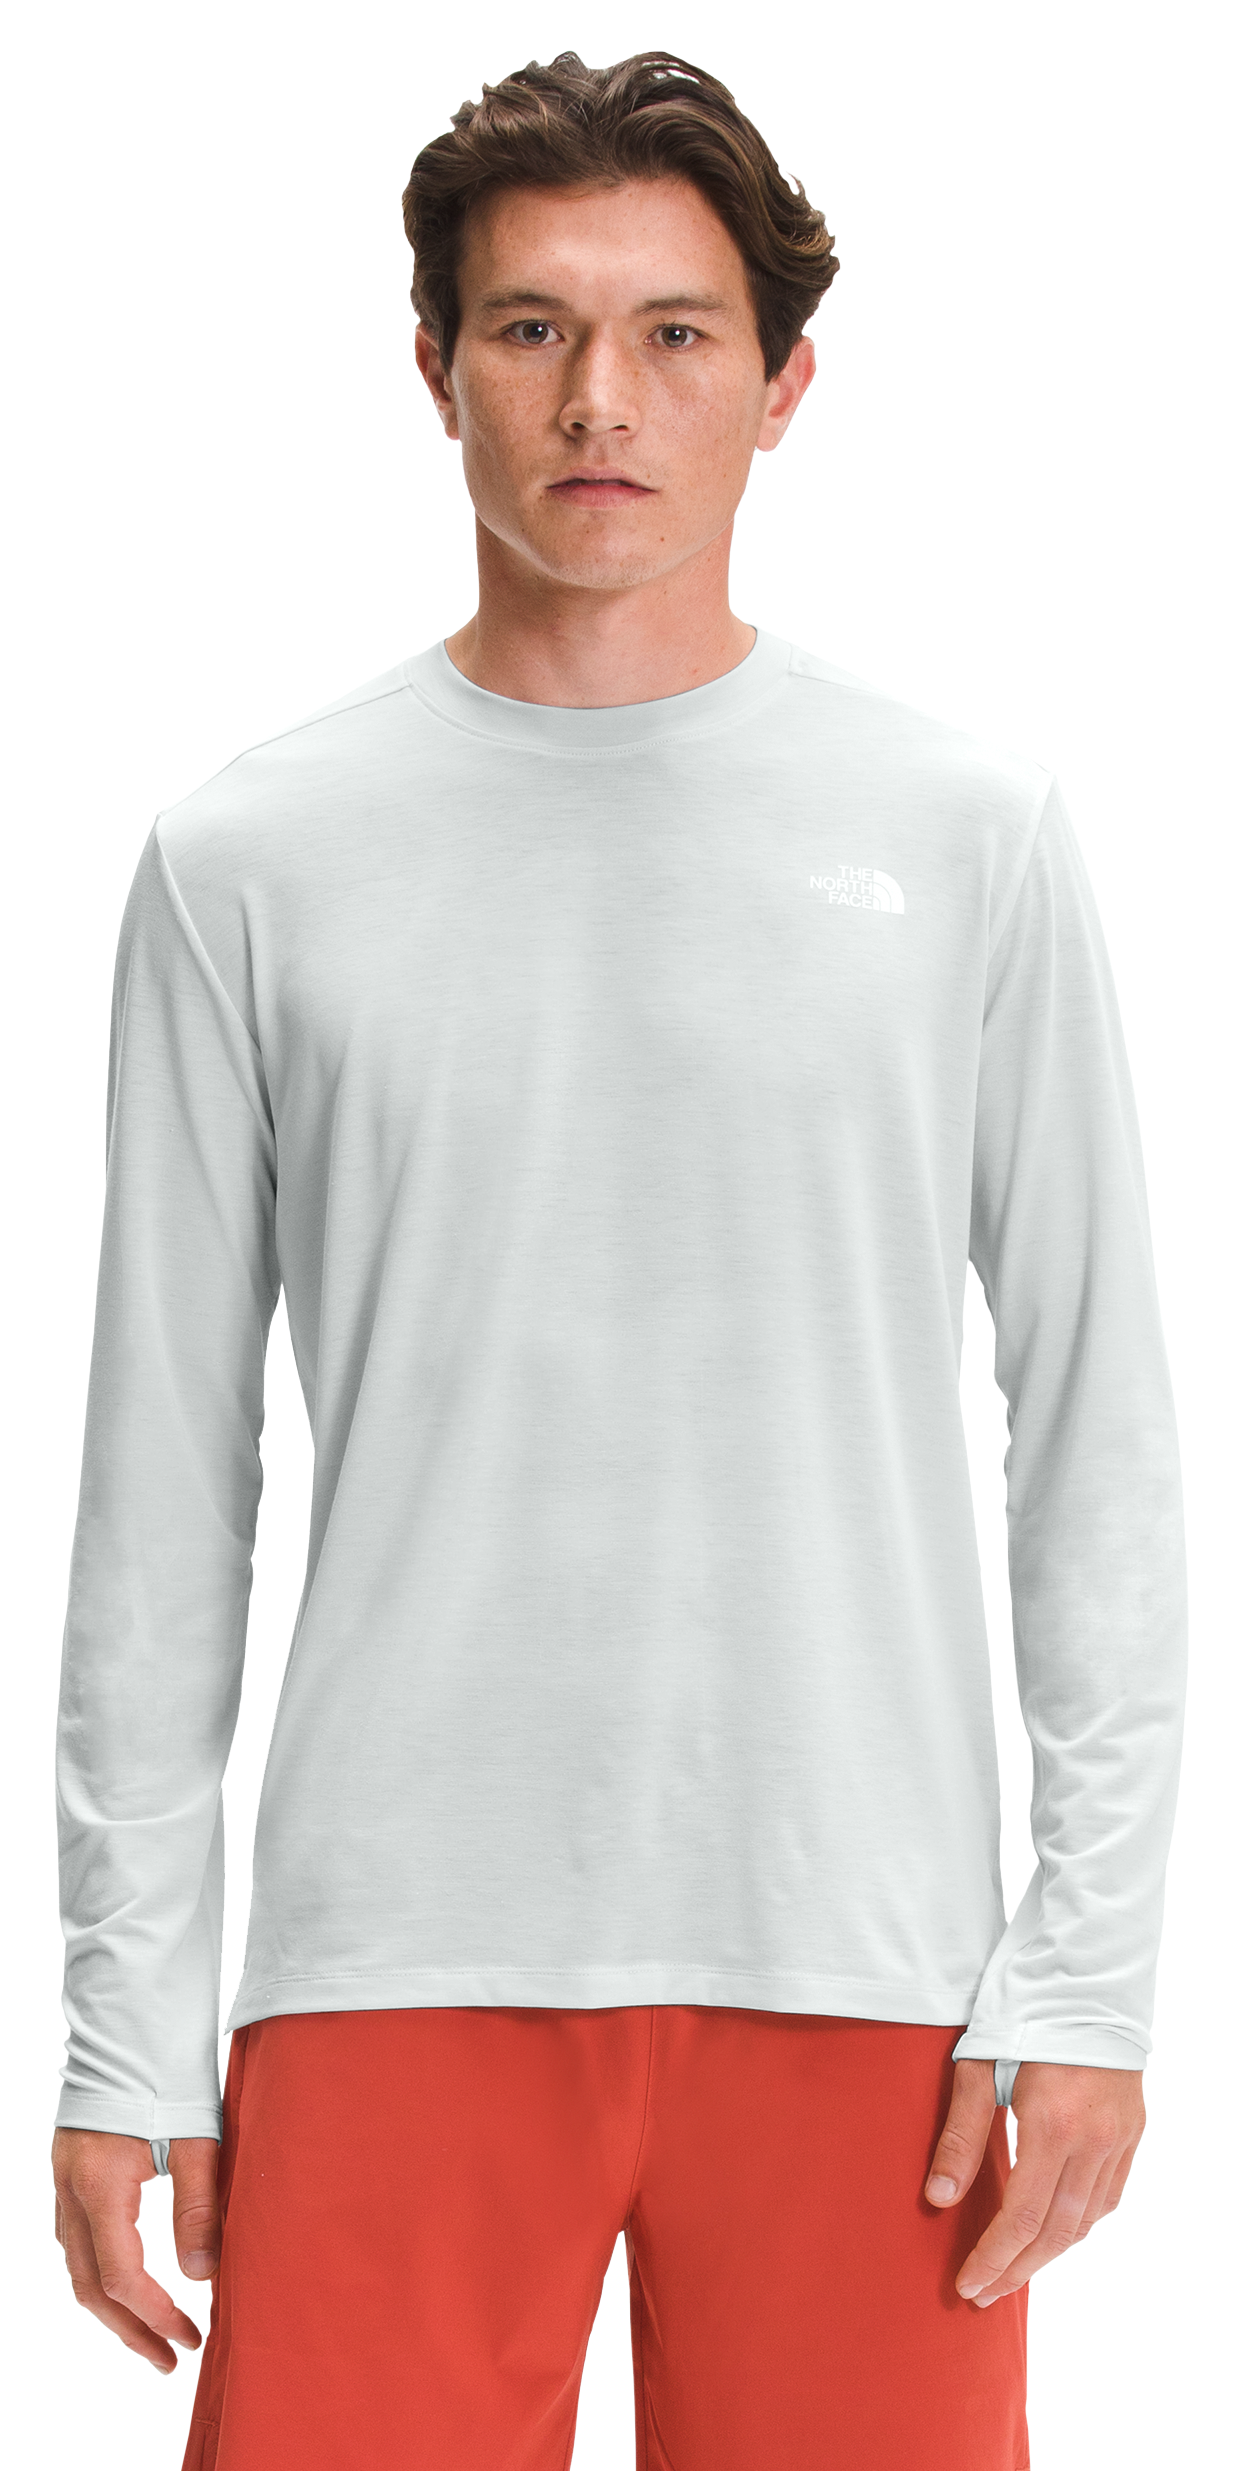 The North Face Wander Long-Sleeve Shirt for Men - Tin Grey - M